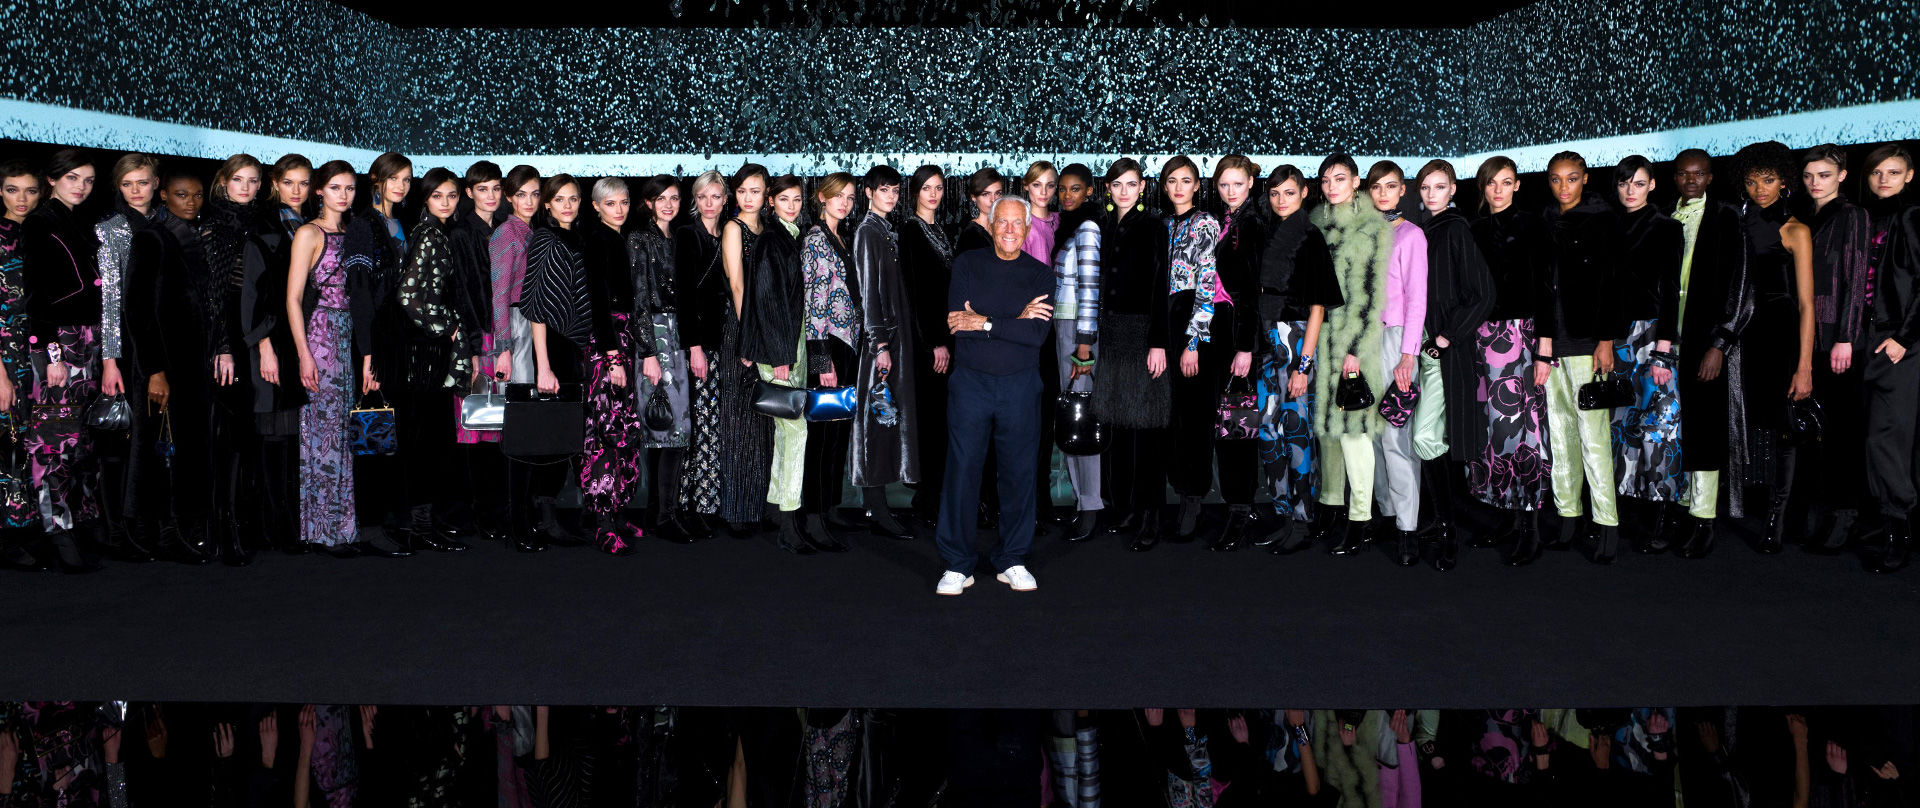 Giorgio Armani With Fashion Models